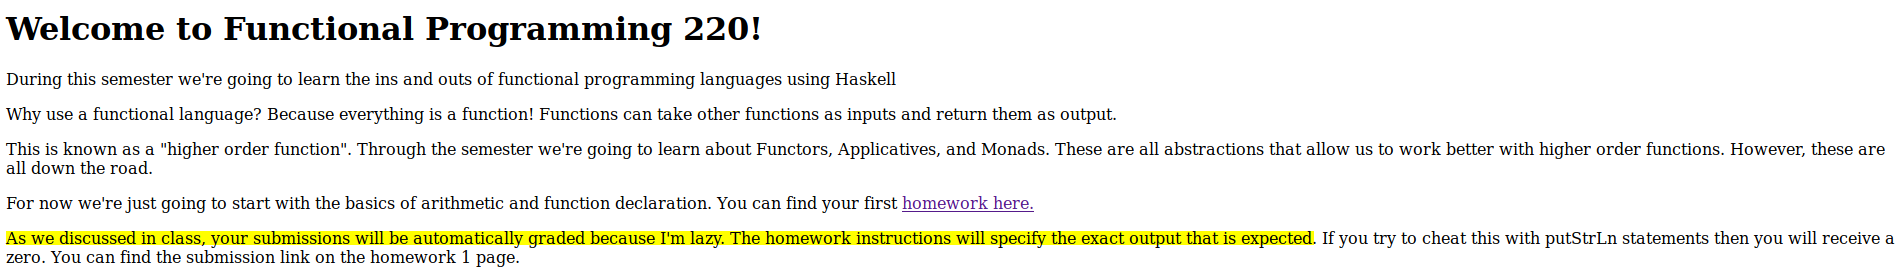 Haskhell website revisited